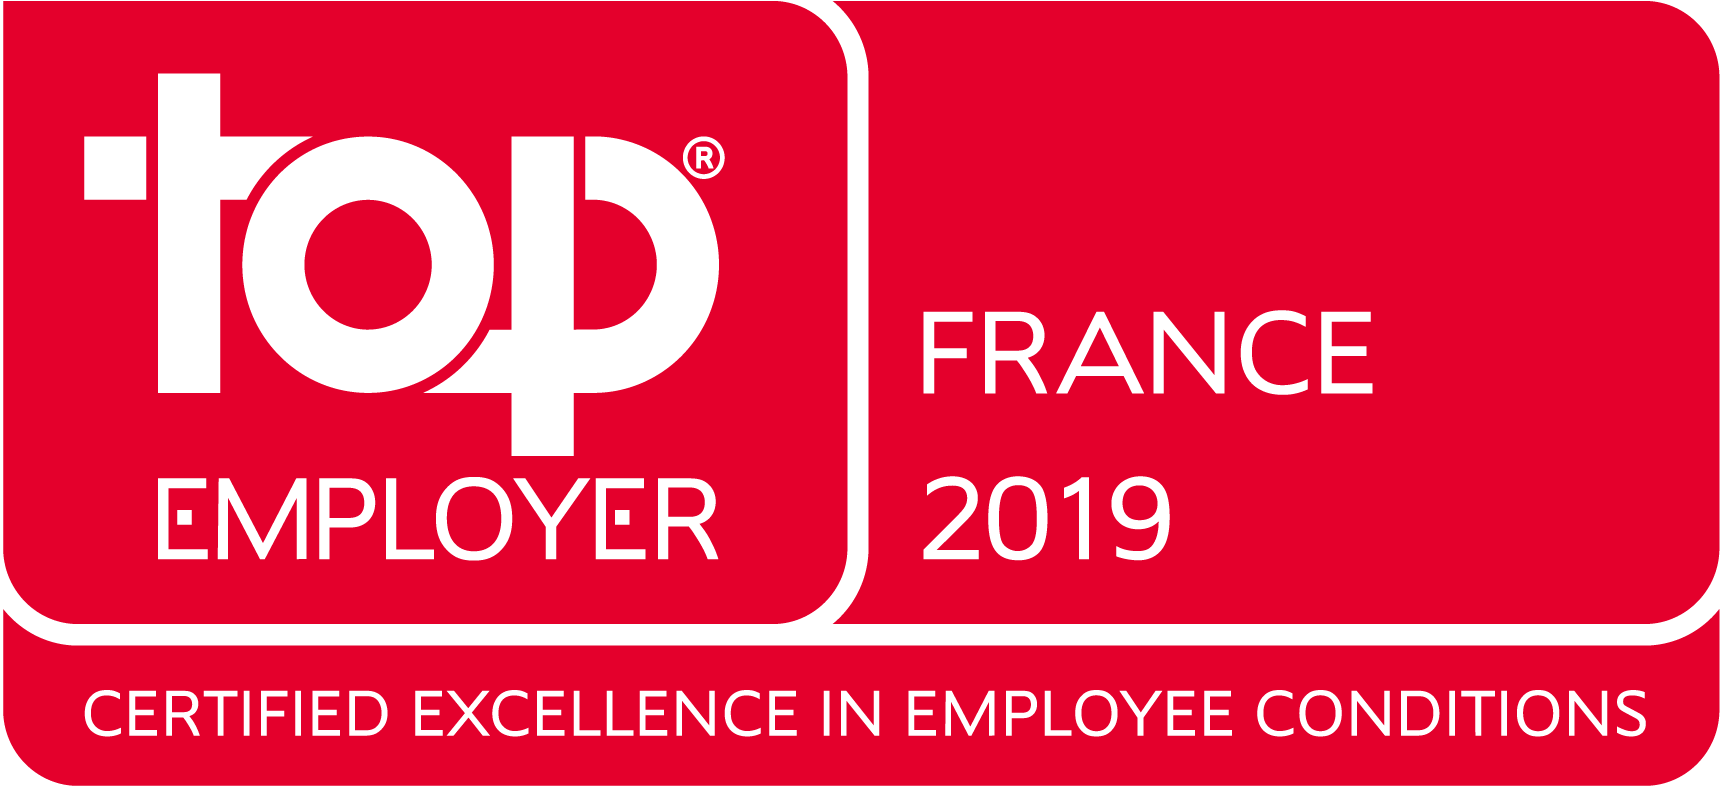 Top employer 2019